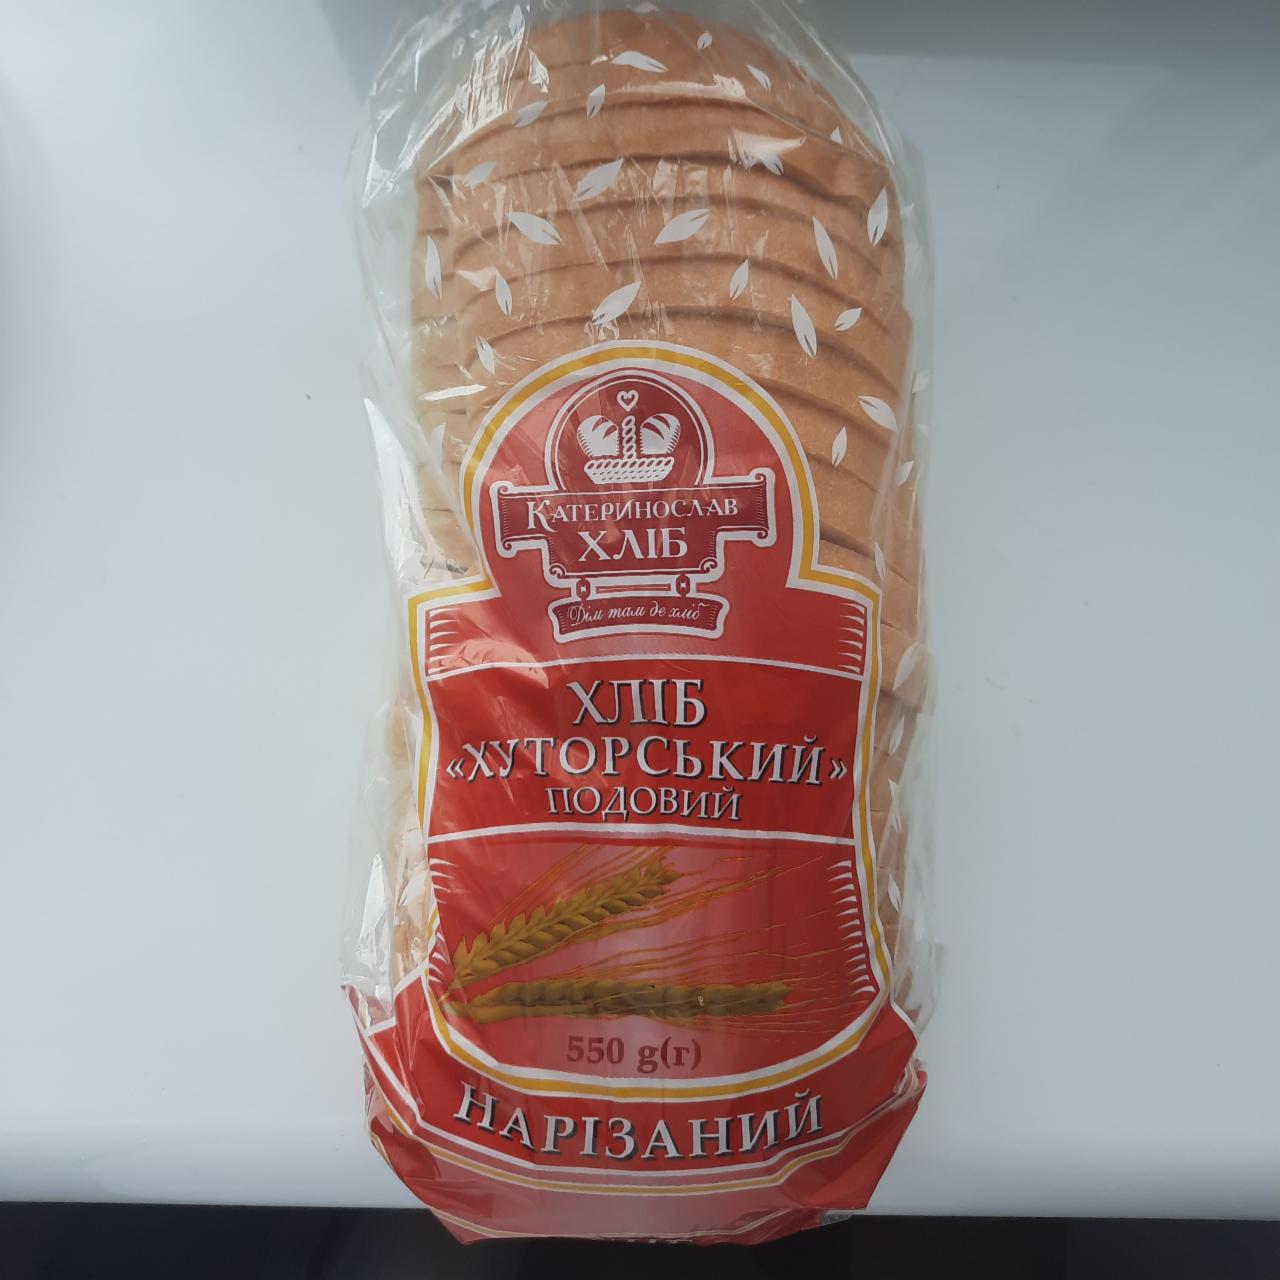 Фото - Хлеб Хуторской Катеринослав хліб